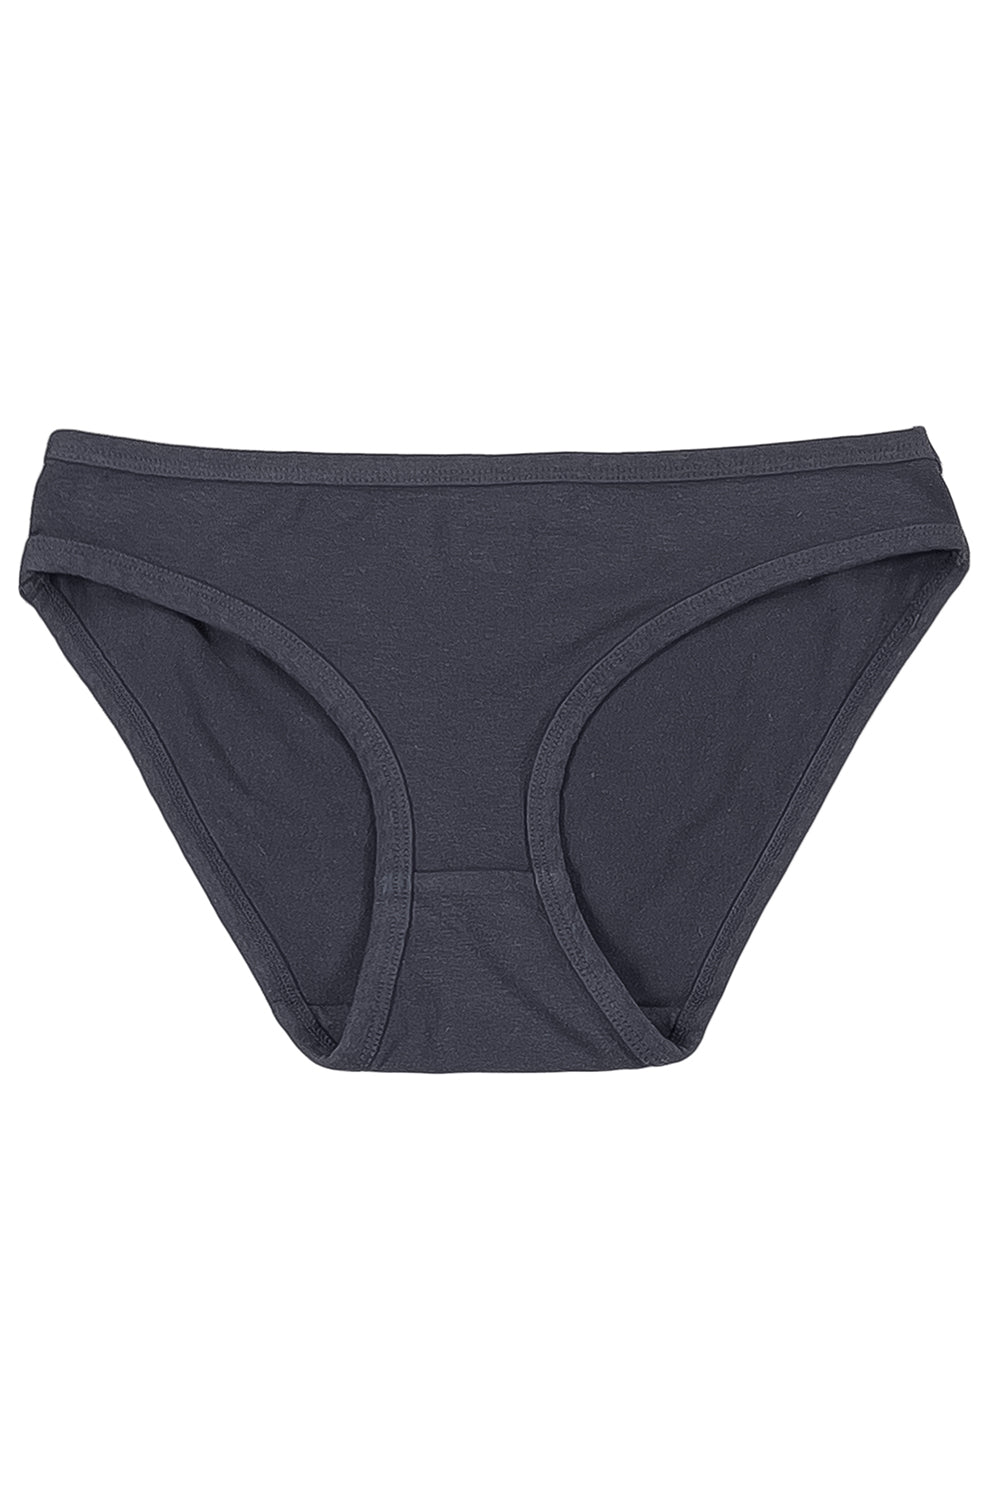 Bikini Brief | Jungmaven Hemp Clothing & Accessories / Color: Diesel Gray